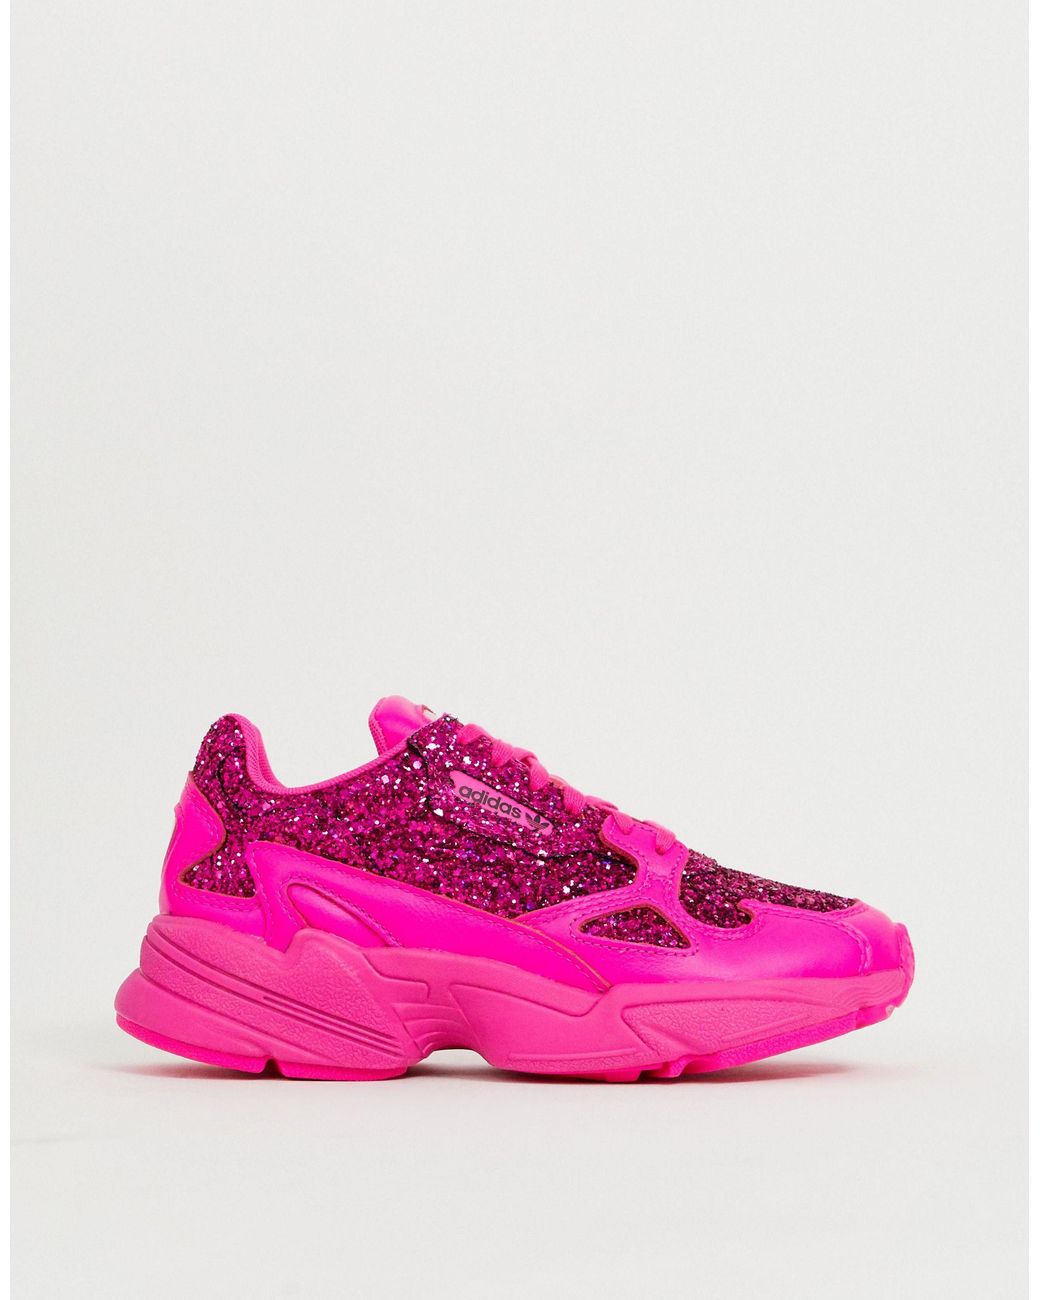 adidas Originals Leather Premium Pink Glitter Falcon Sneakers | Lyst